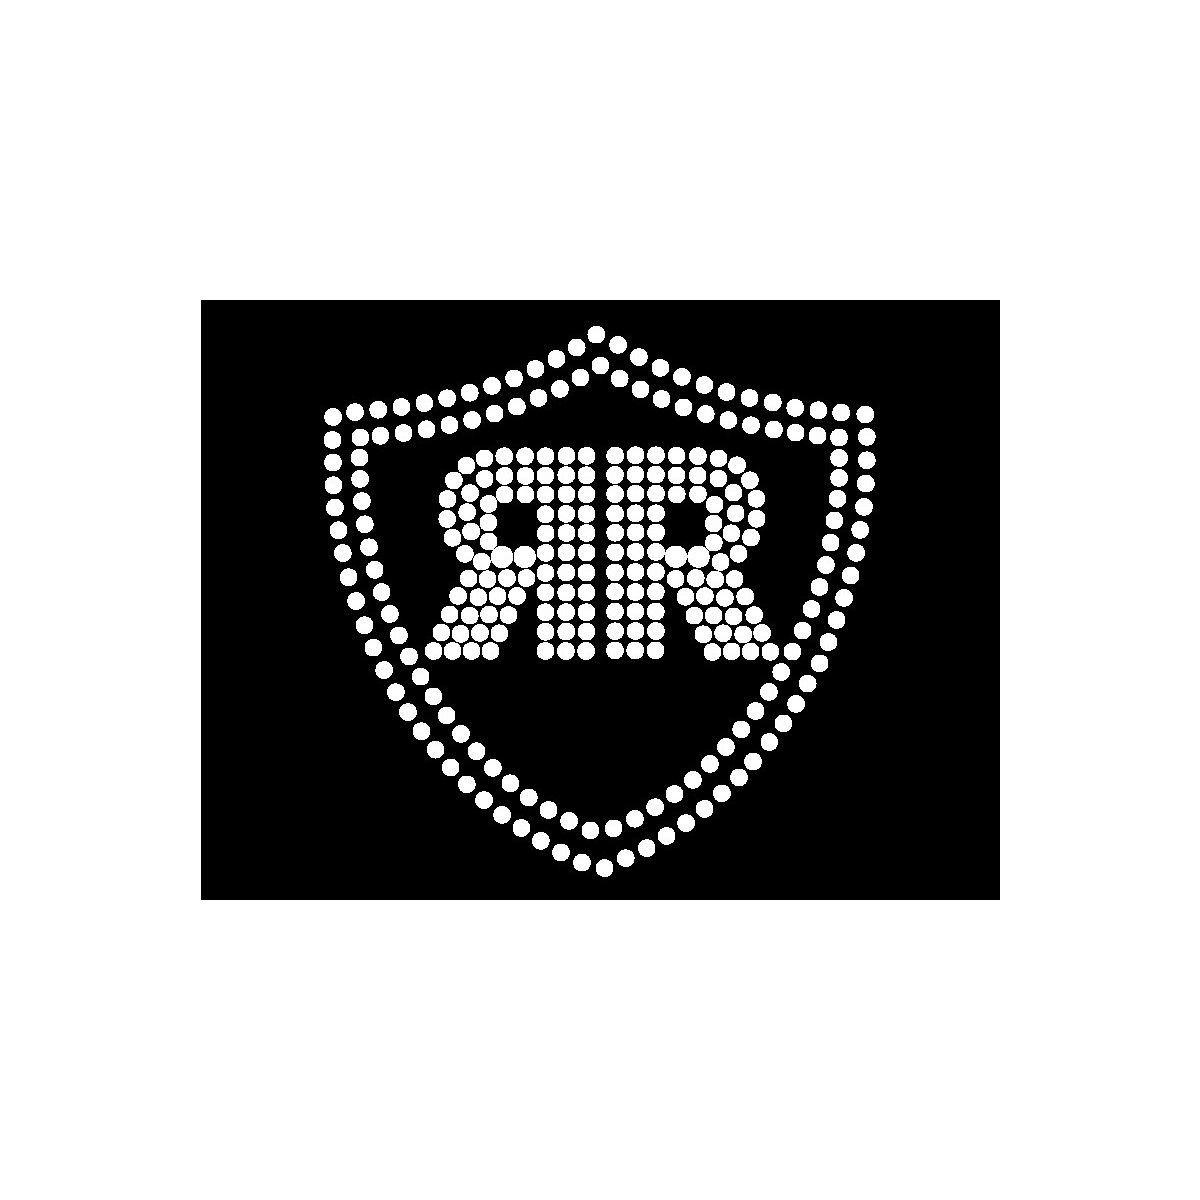 Rhinestone Company Logo - Personalised Company / Business #Name or #Logo #bling. Business